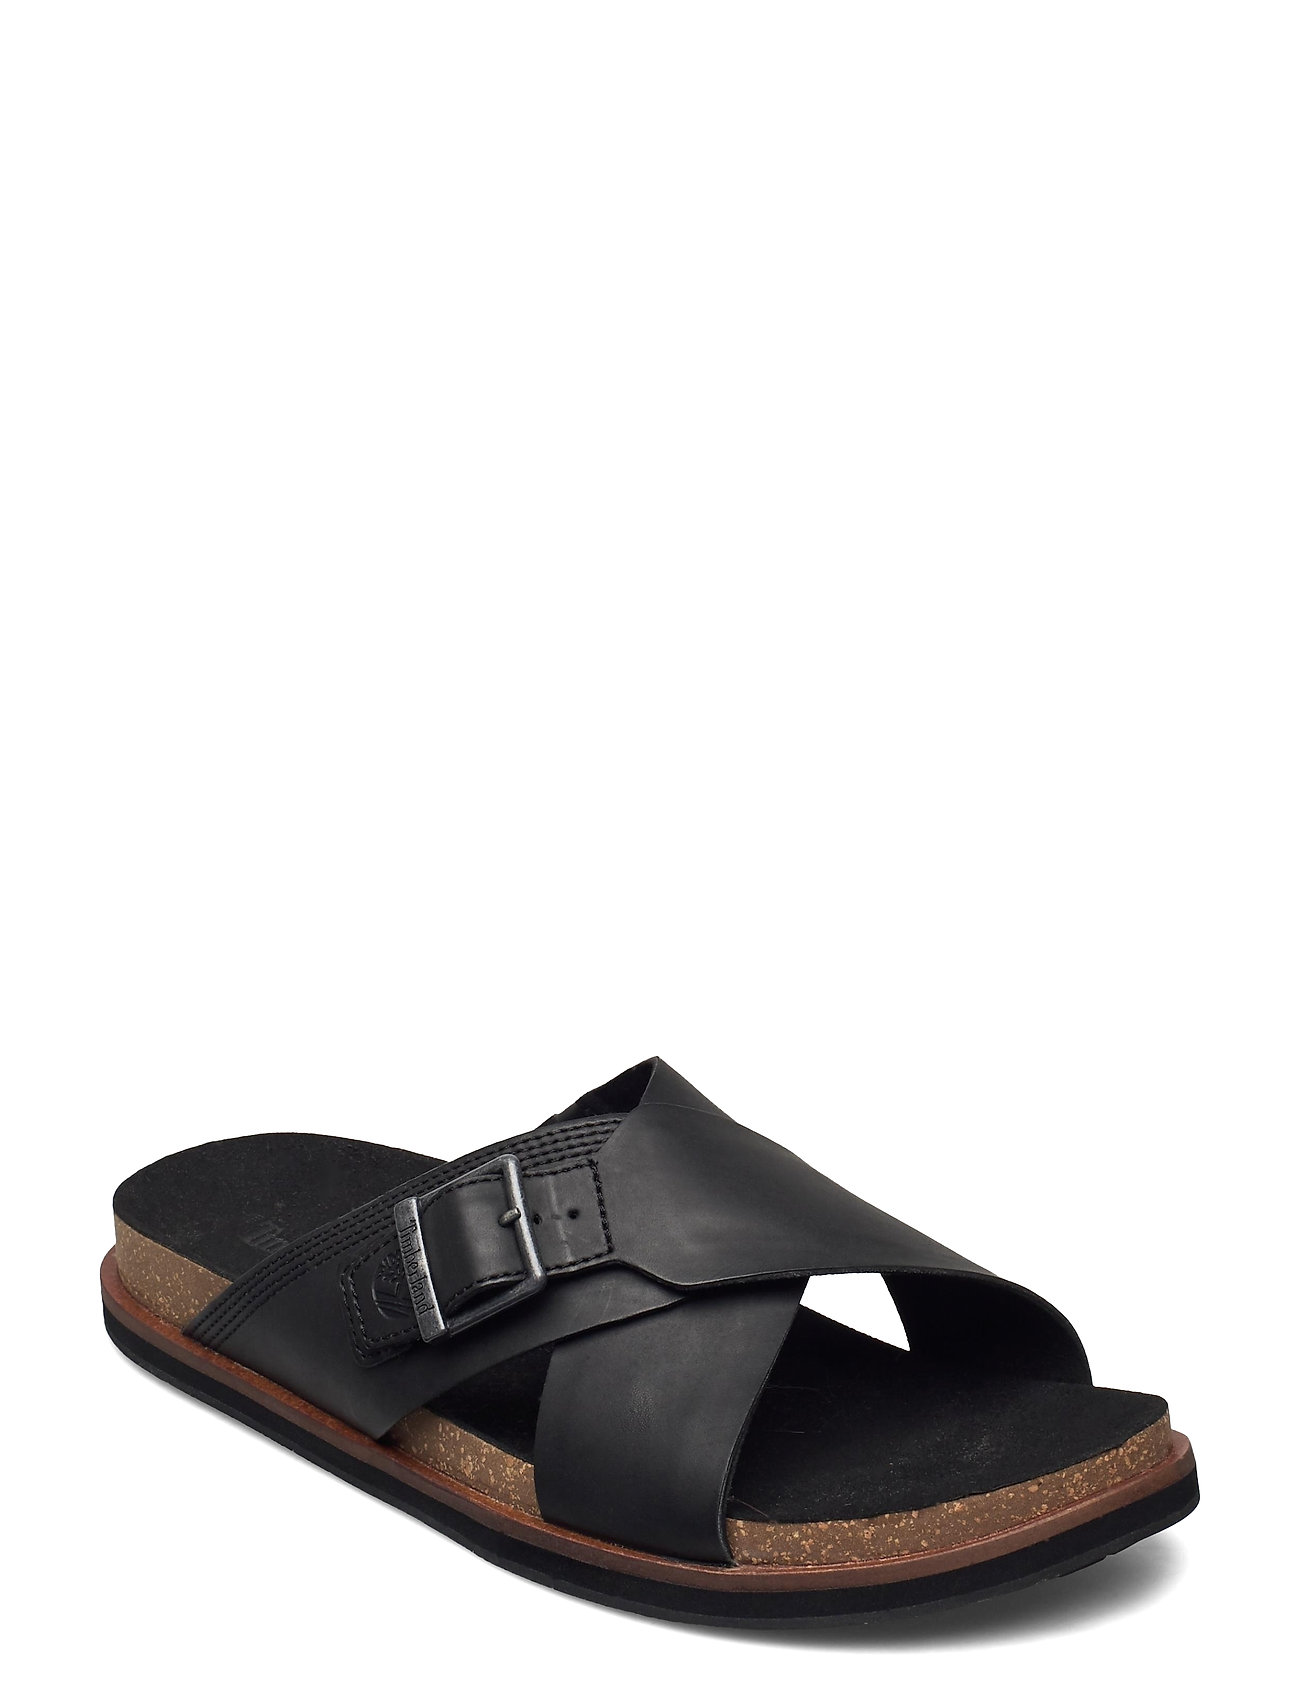 O Microbio consumidor Timberland Amalfi Vibes Cross Slide - Sandals - Boozt.com